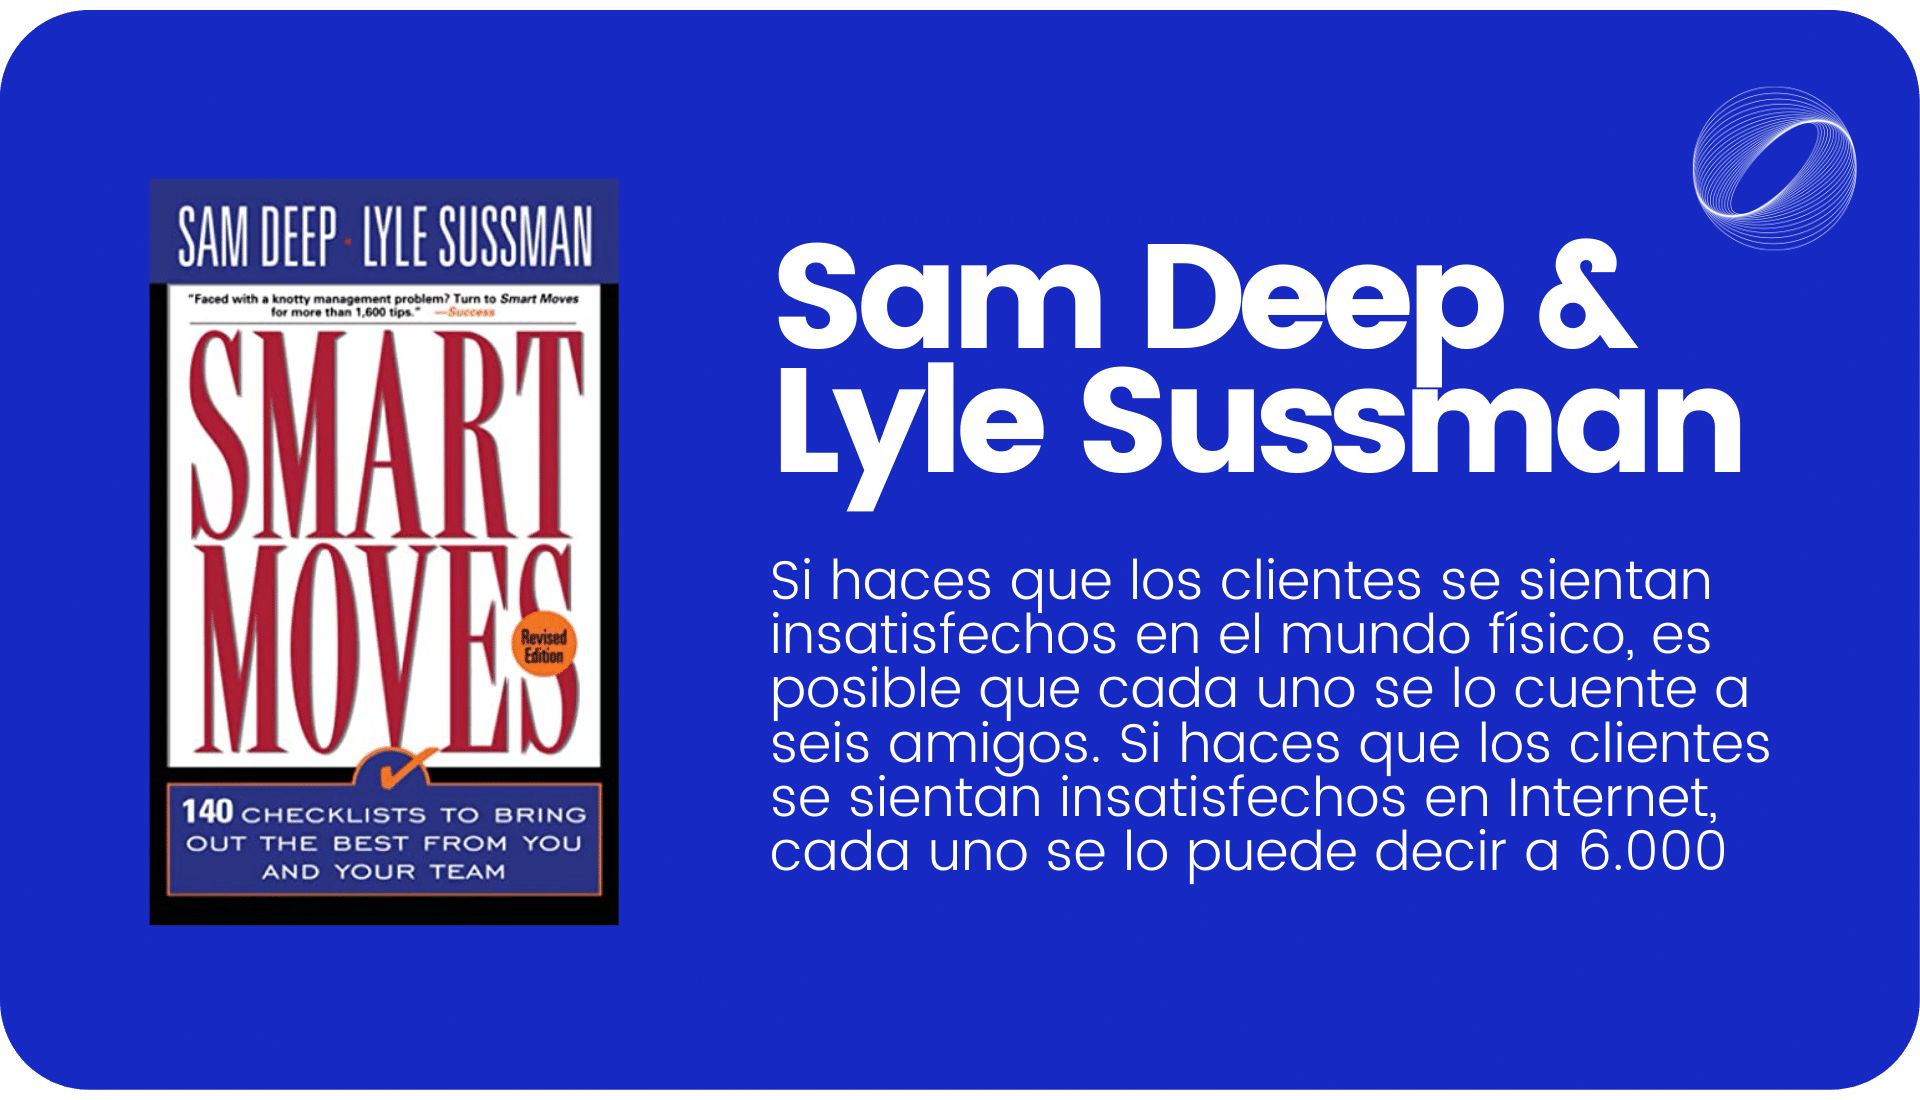 Sam Deep & Lyle Sussman